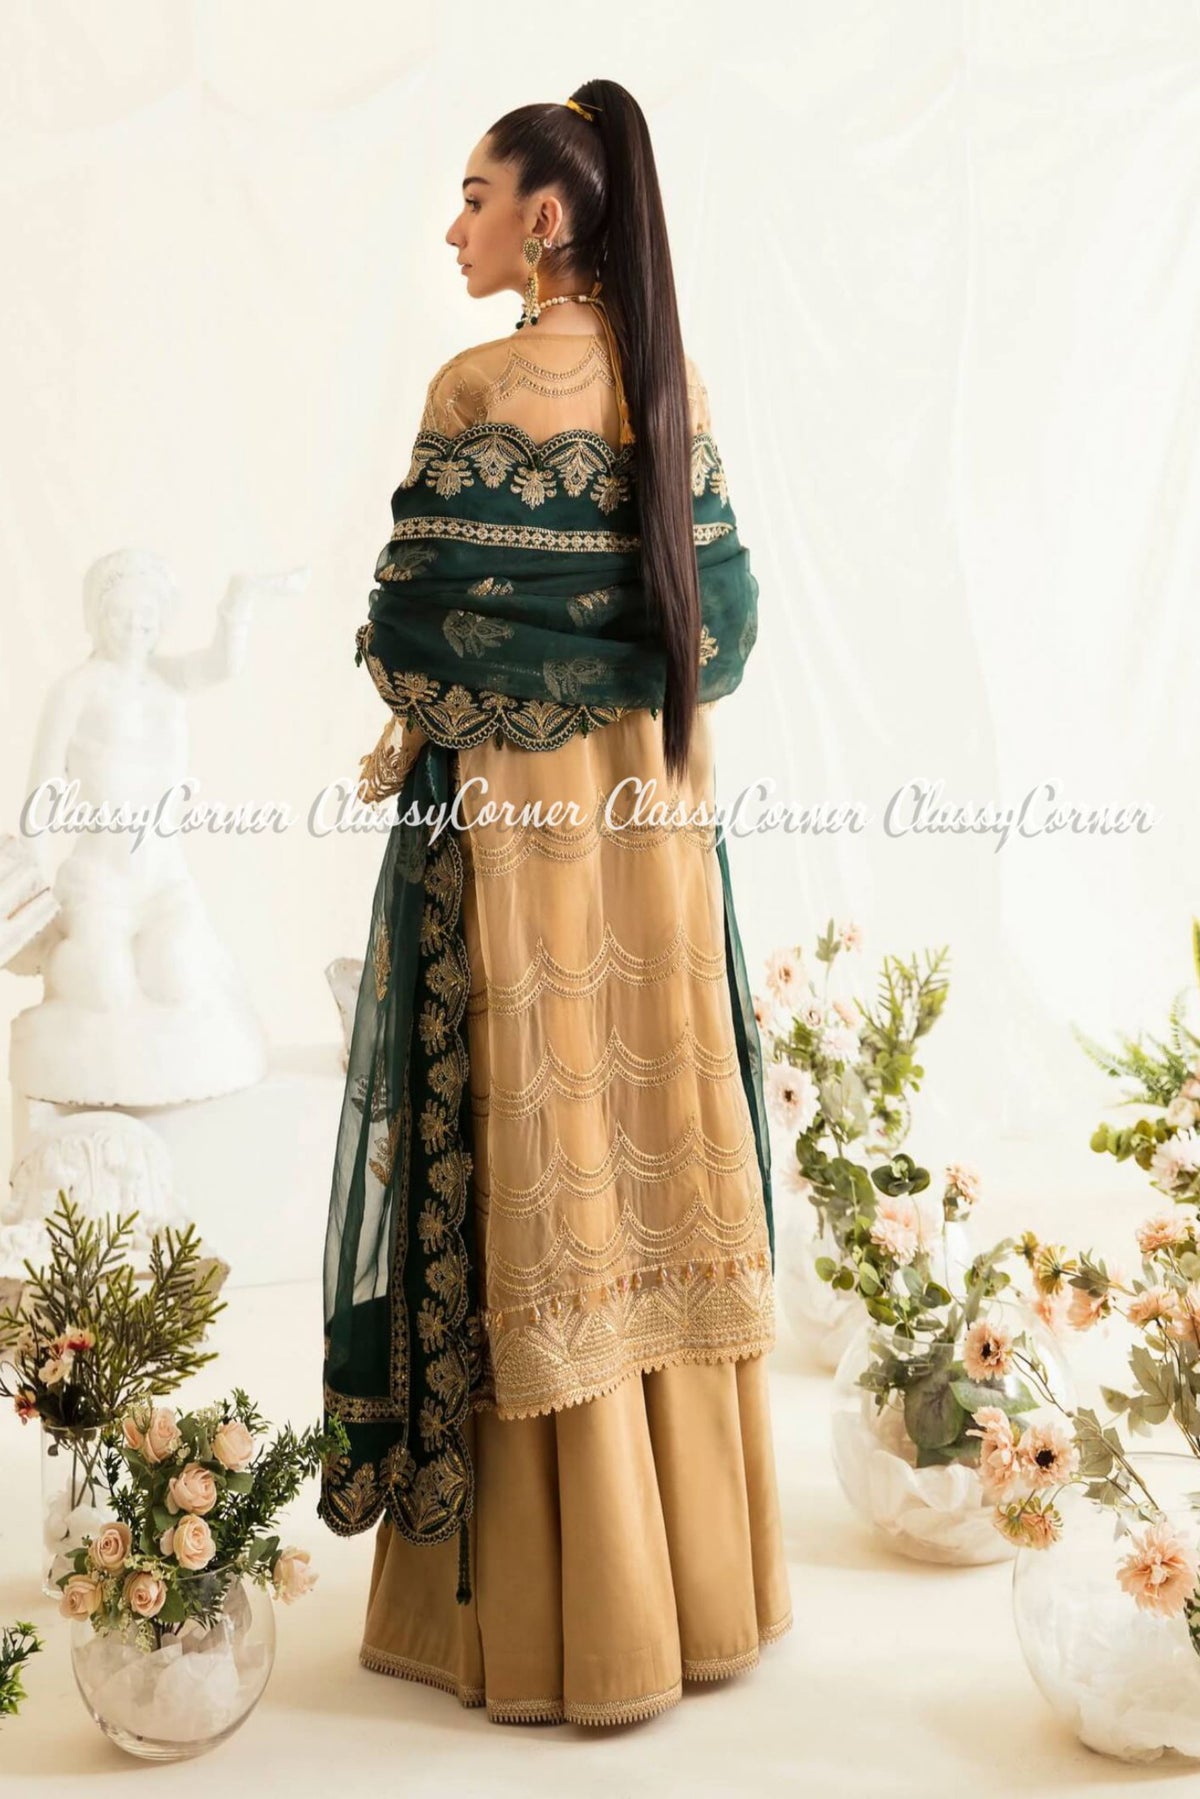 Traditional Pakistani wedding attire